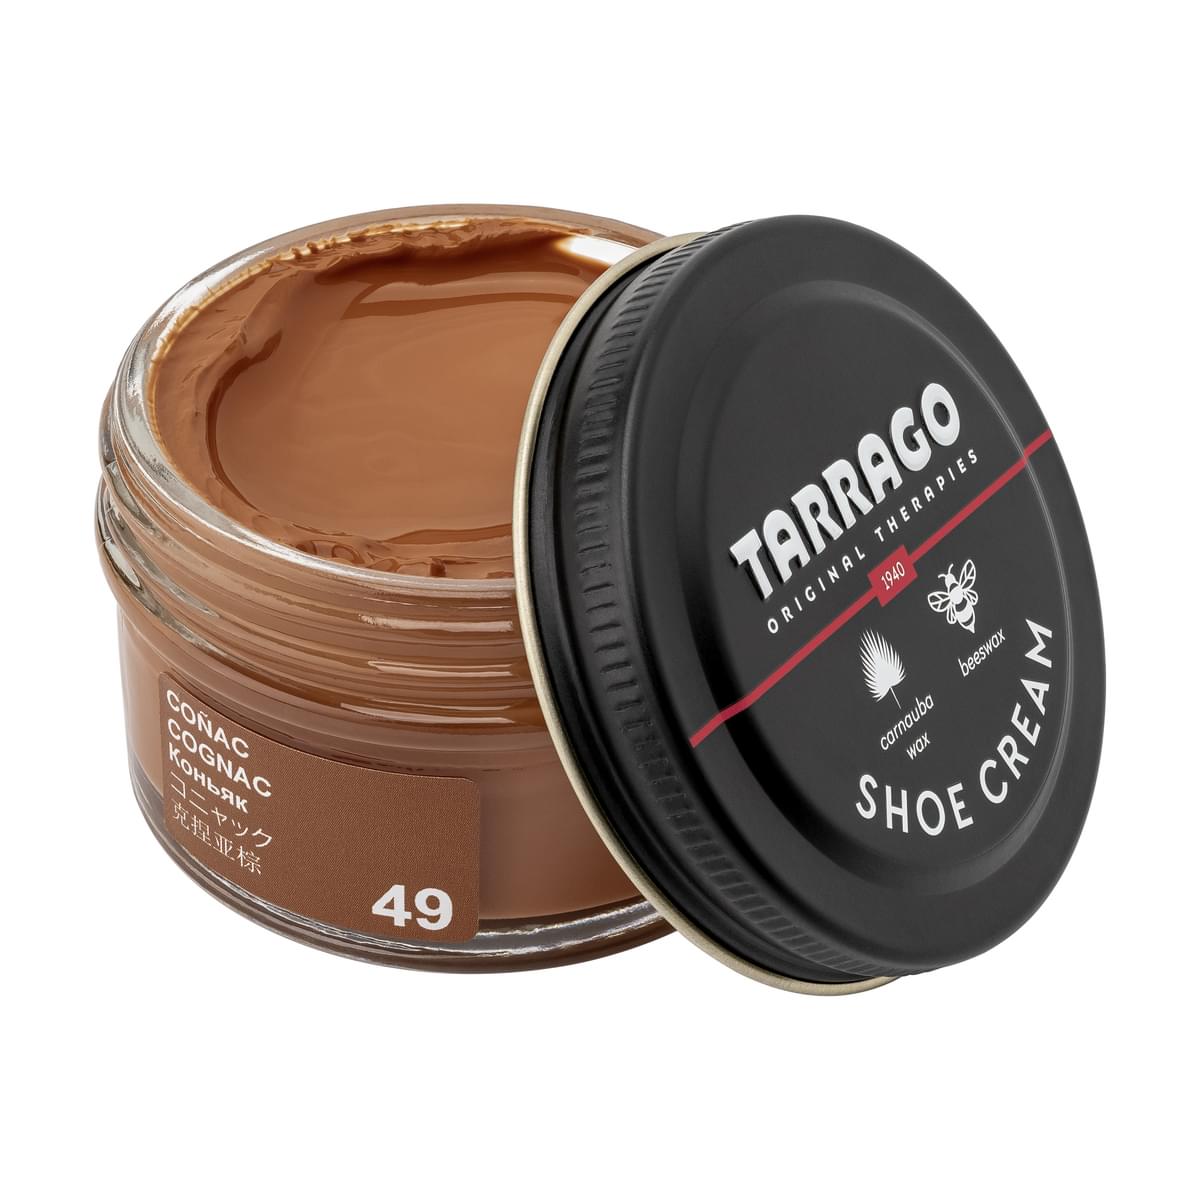 Tarrago Shoe Cream  - Cognac - 49